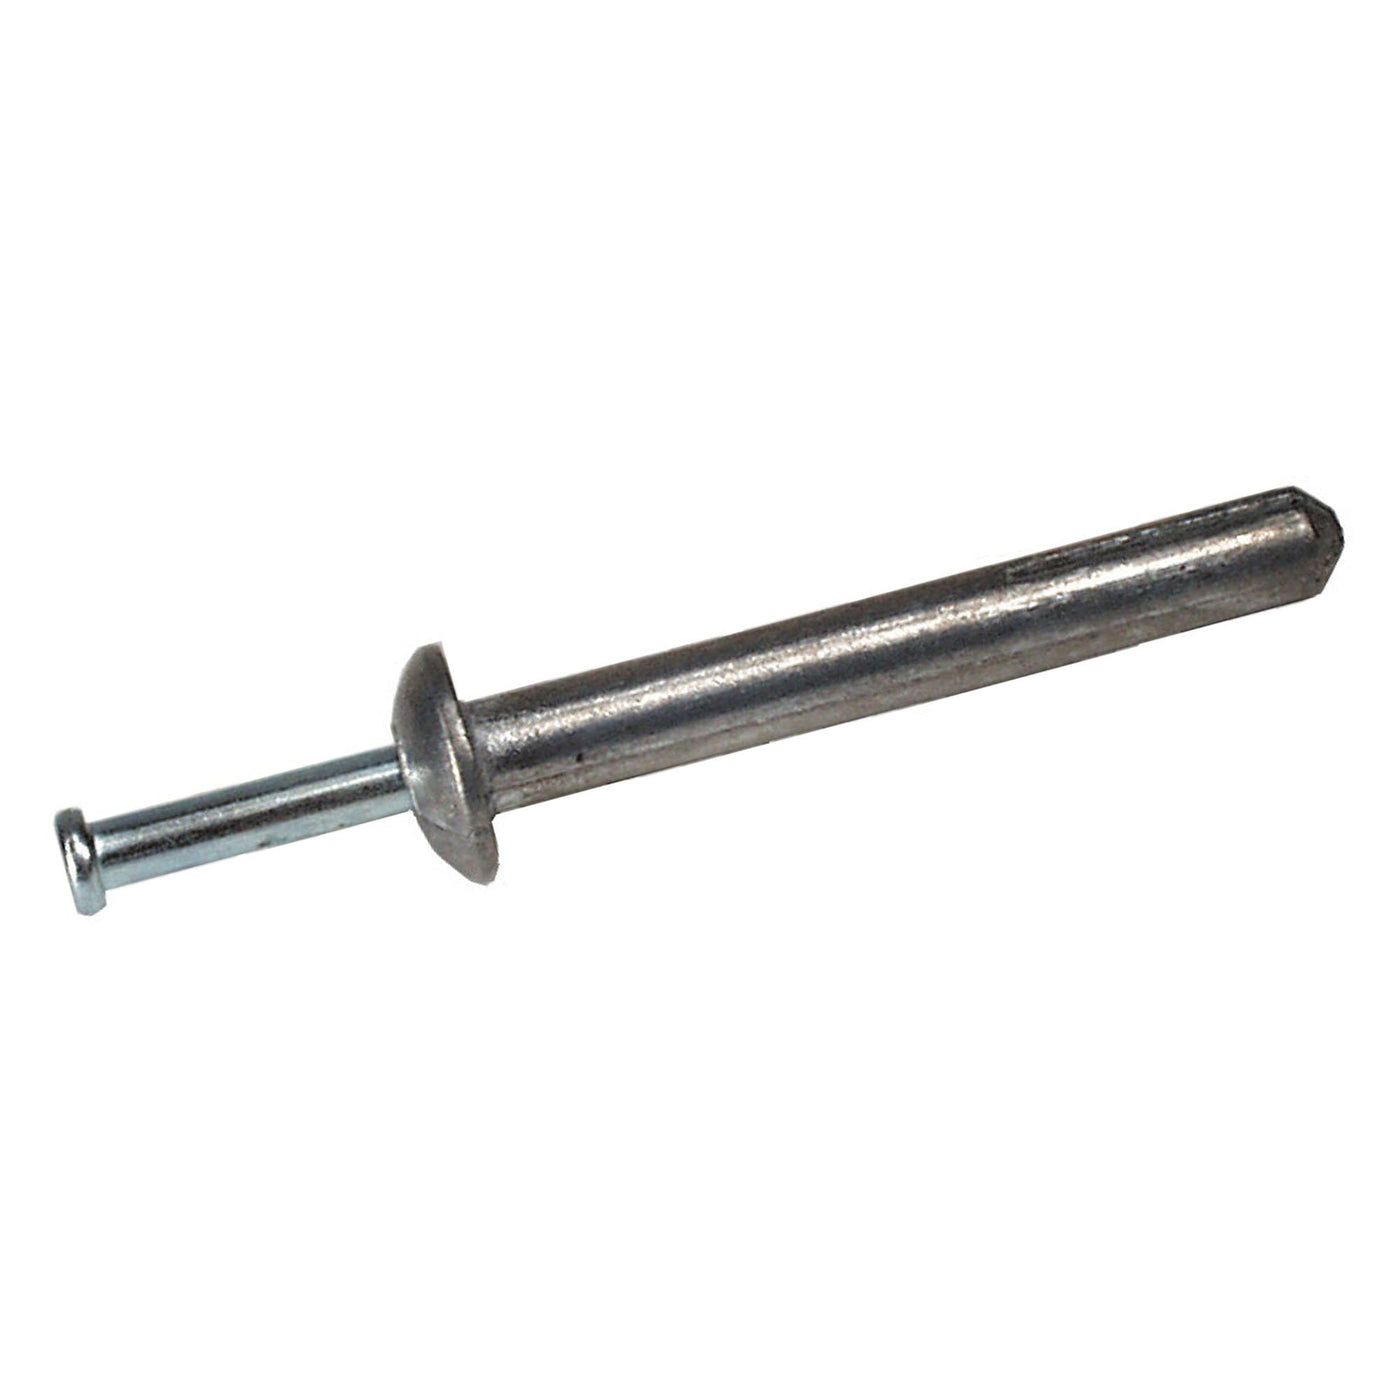 1/4 x 1 1/2 Simpson Zinc Nailon™ Pin Drive Anchor Mushroom Head 304 Stainless Steel Pin (100)